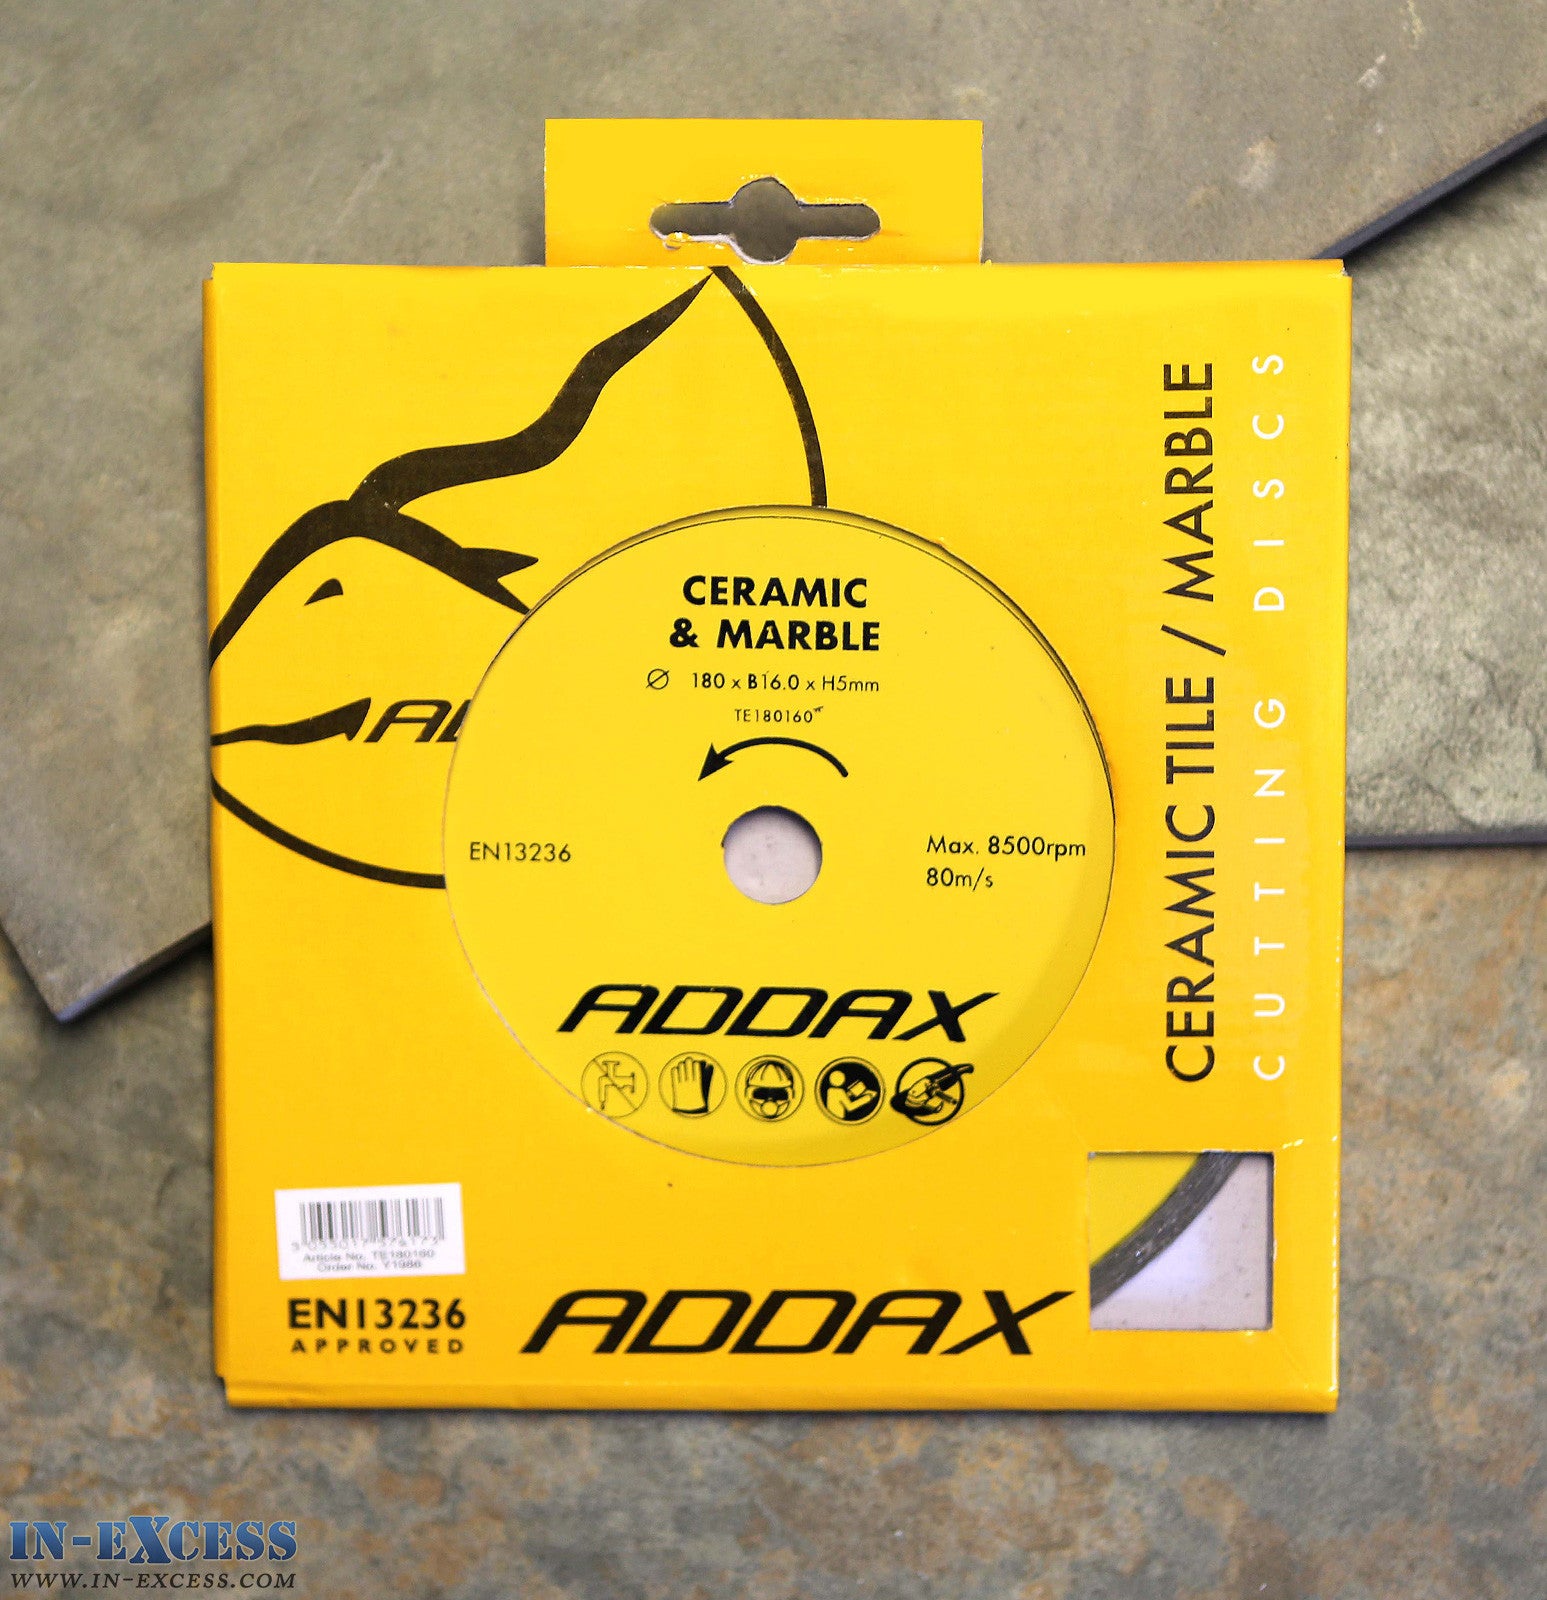 ADDAX TIMCO Diamond Ceramic Tile/Marble Cutting Disc Saw Blade *Various Sizes*